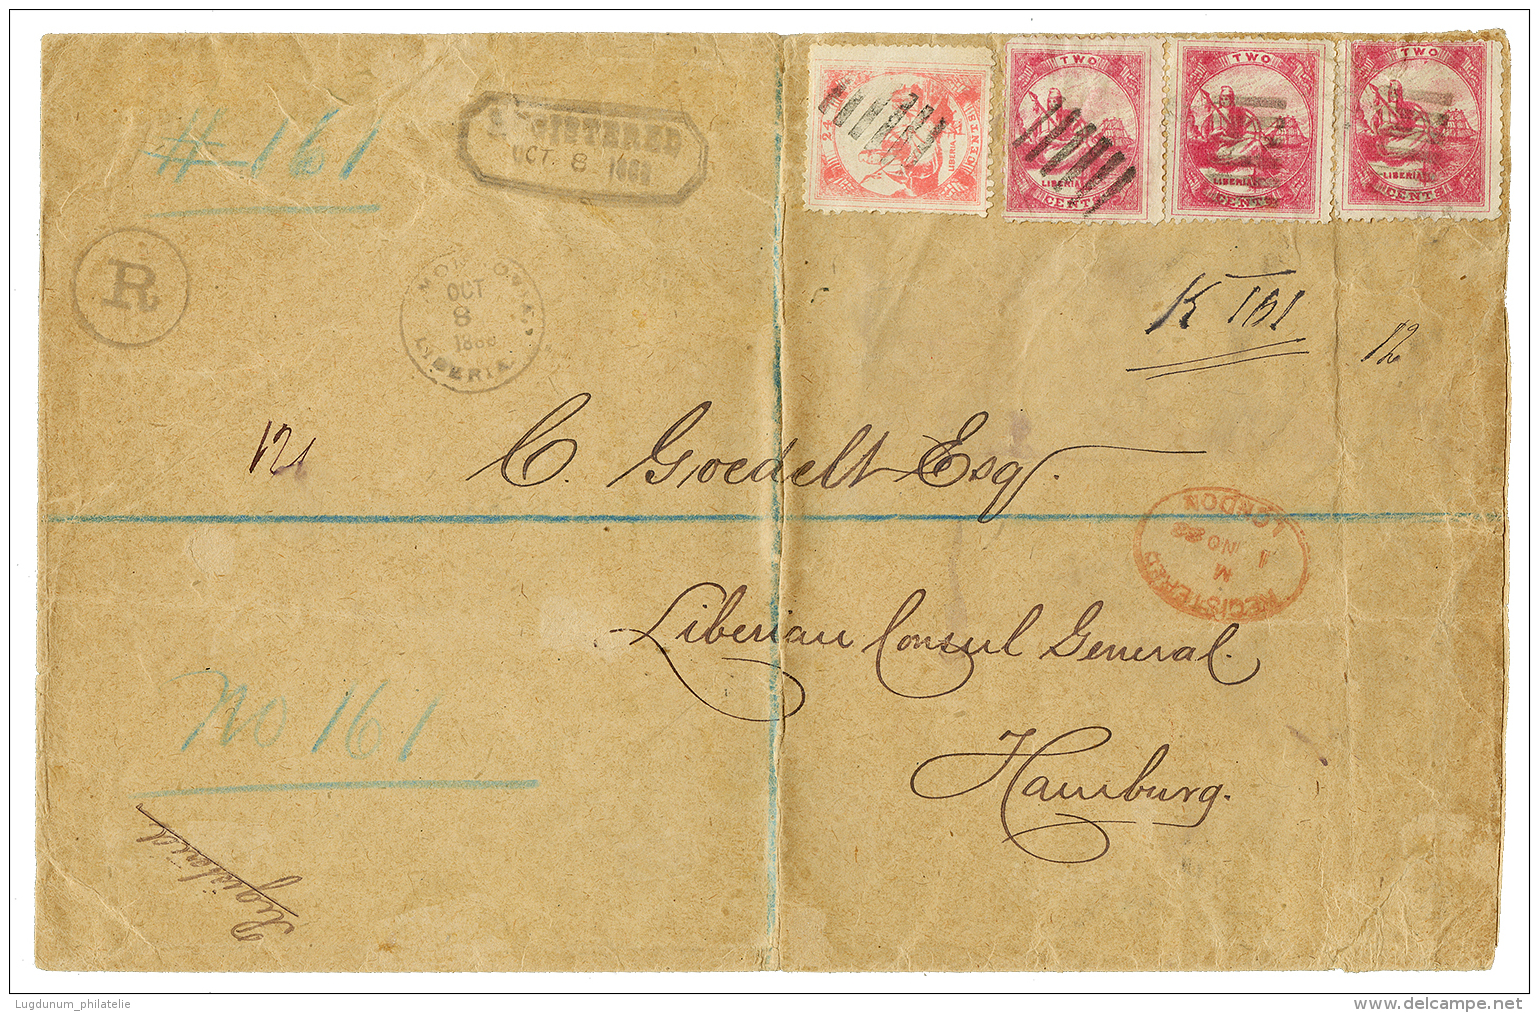 1888 2c(x3) + 24c On REGISTERED Large Envelope From MONROVIA To HAMBURG. Scarce. Vf. - Liberia